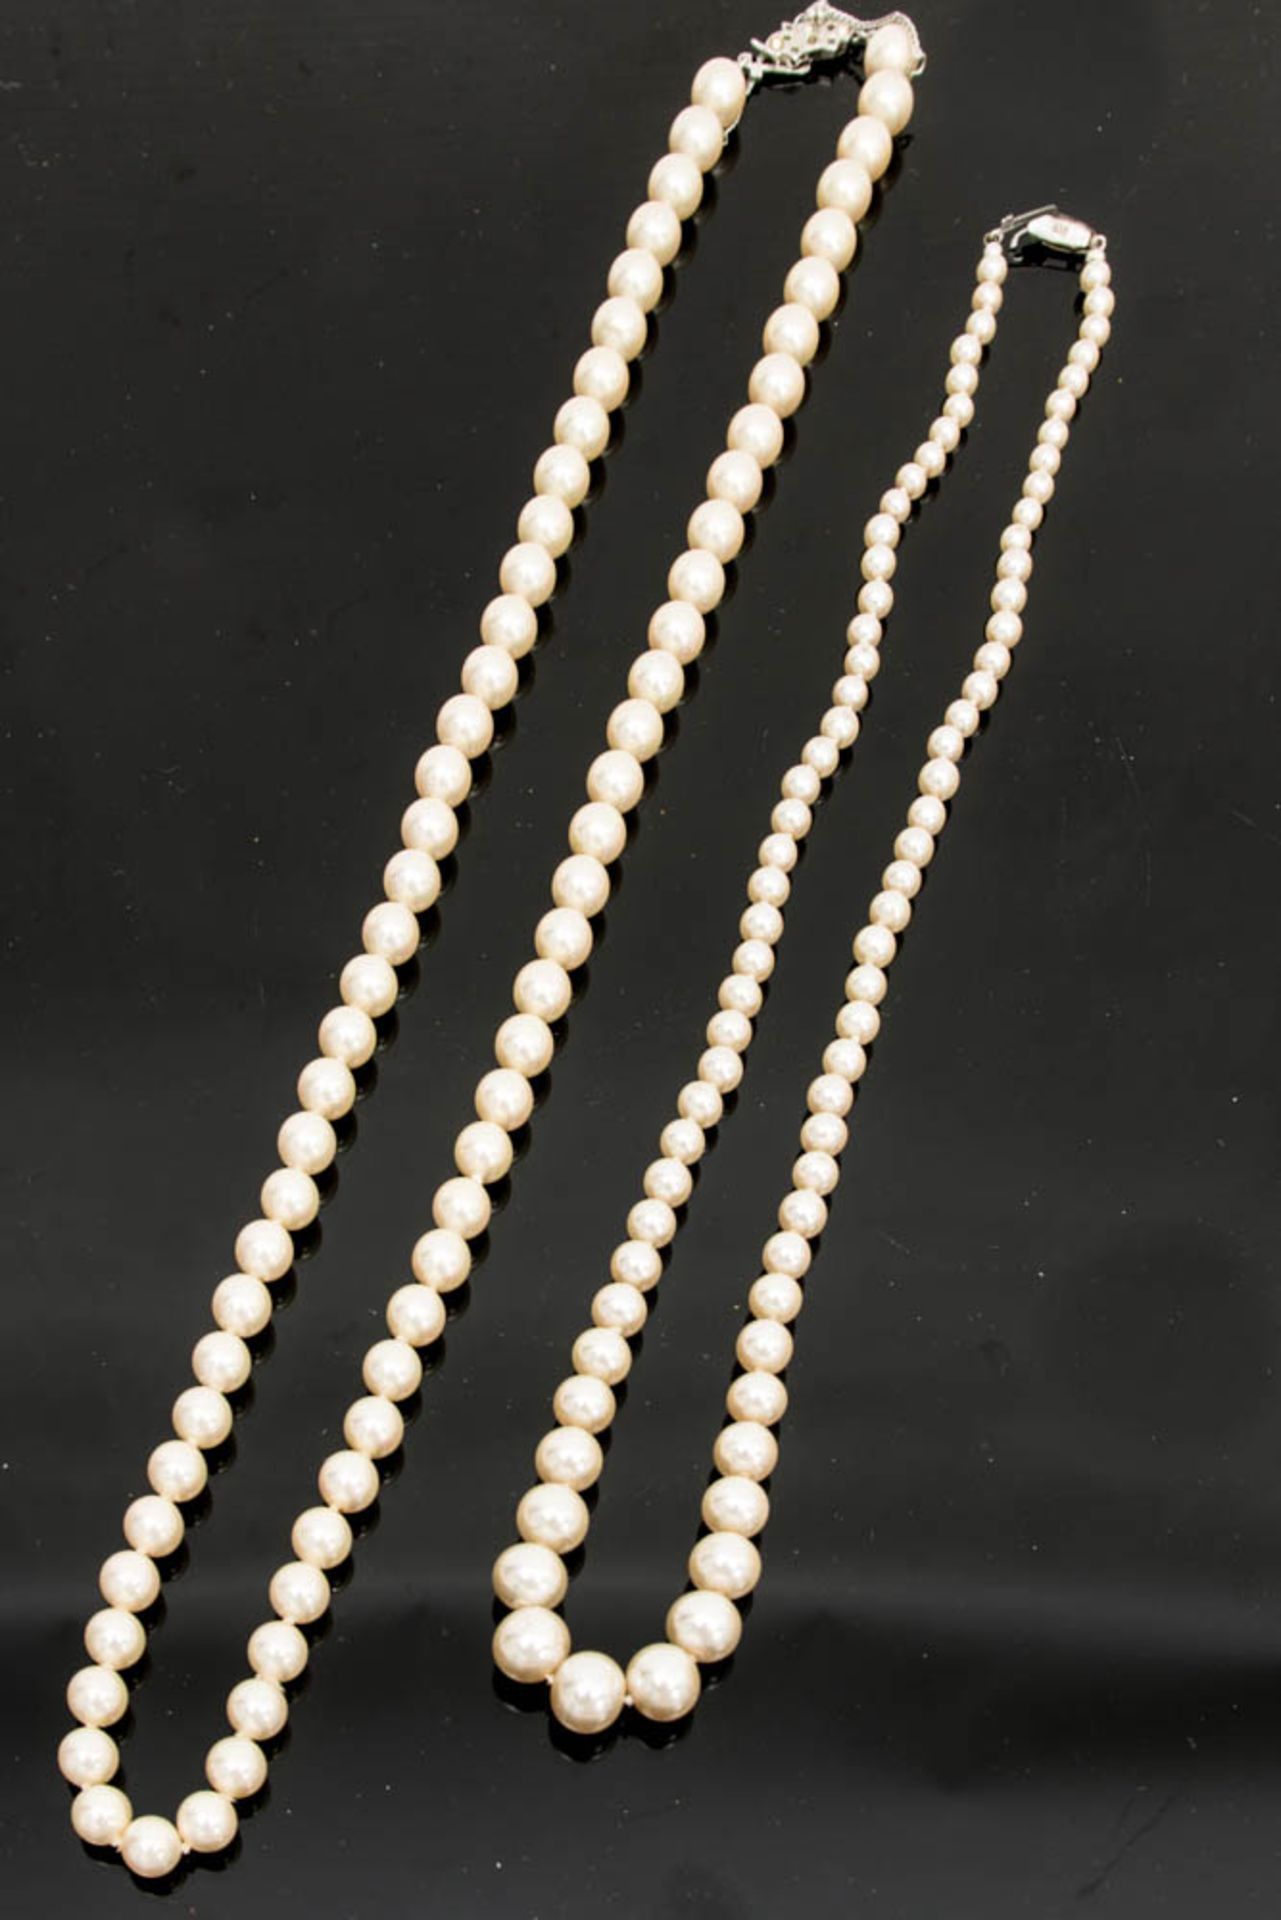 Zwei Perlenketten, Silberverschluss.Zwei Perlenketten.Durchmesser 17,5 cm, mit Sil - Image 2 of 4